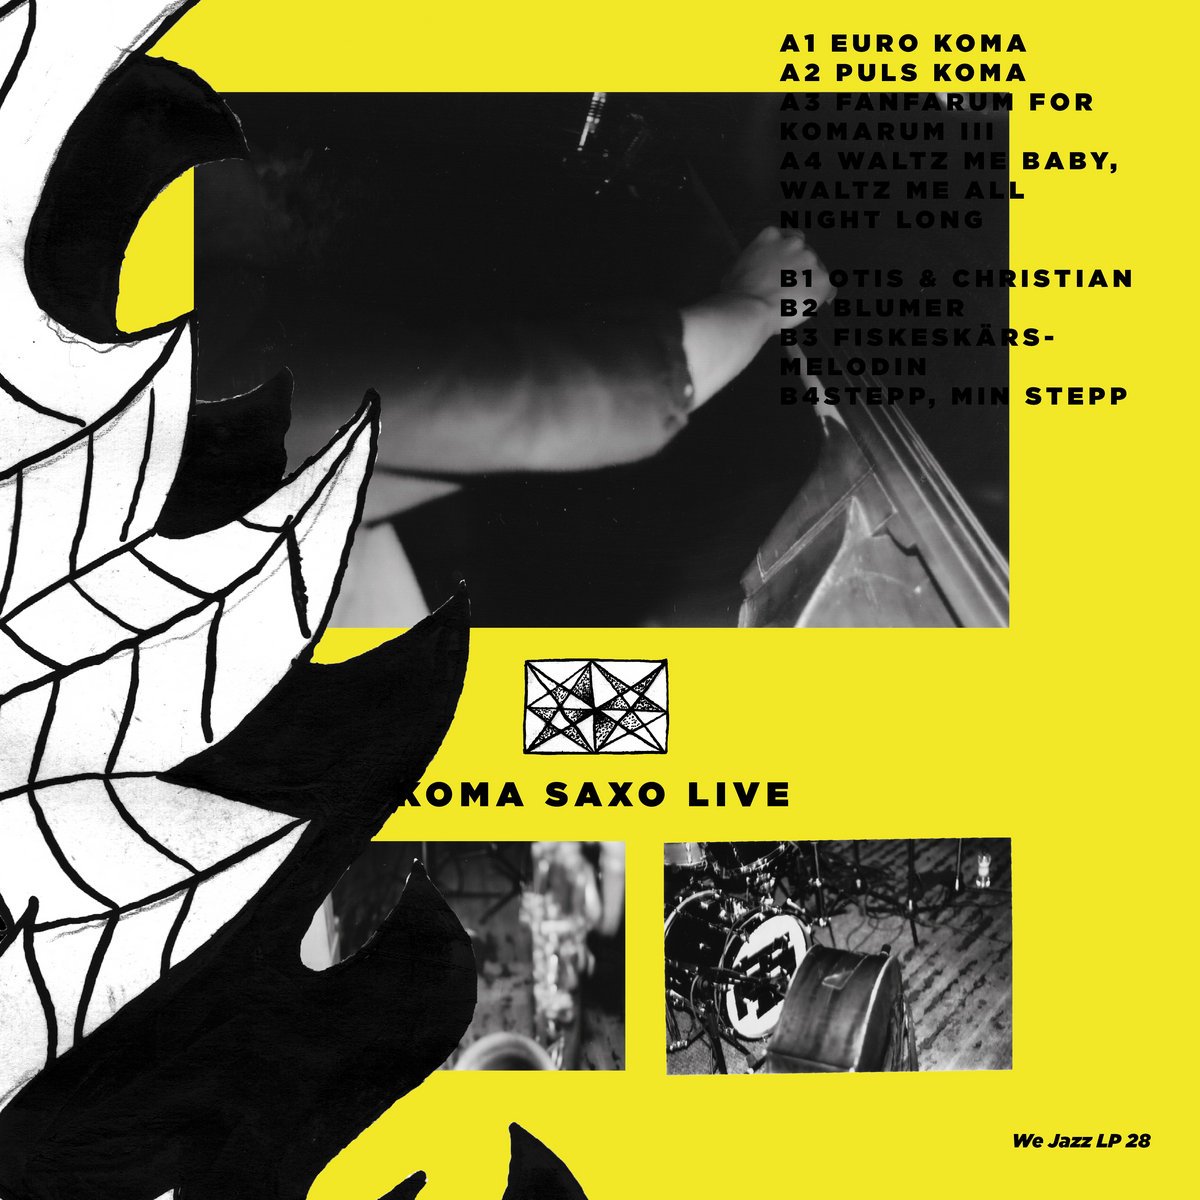 koma-saxo-live-cover